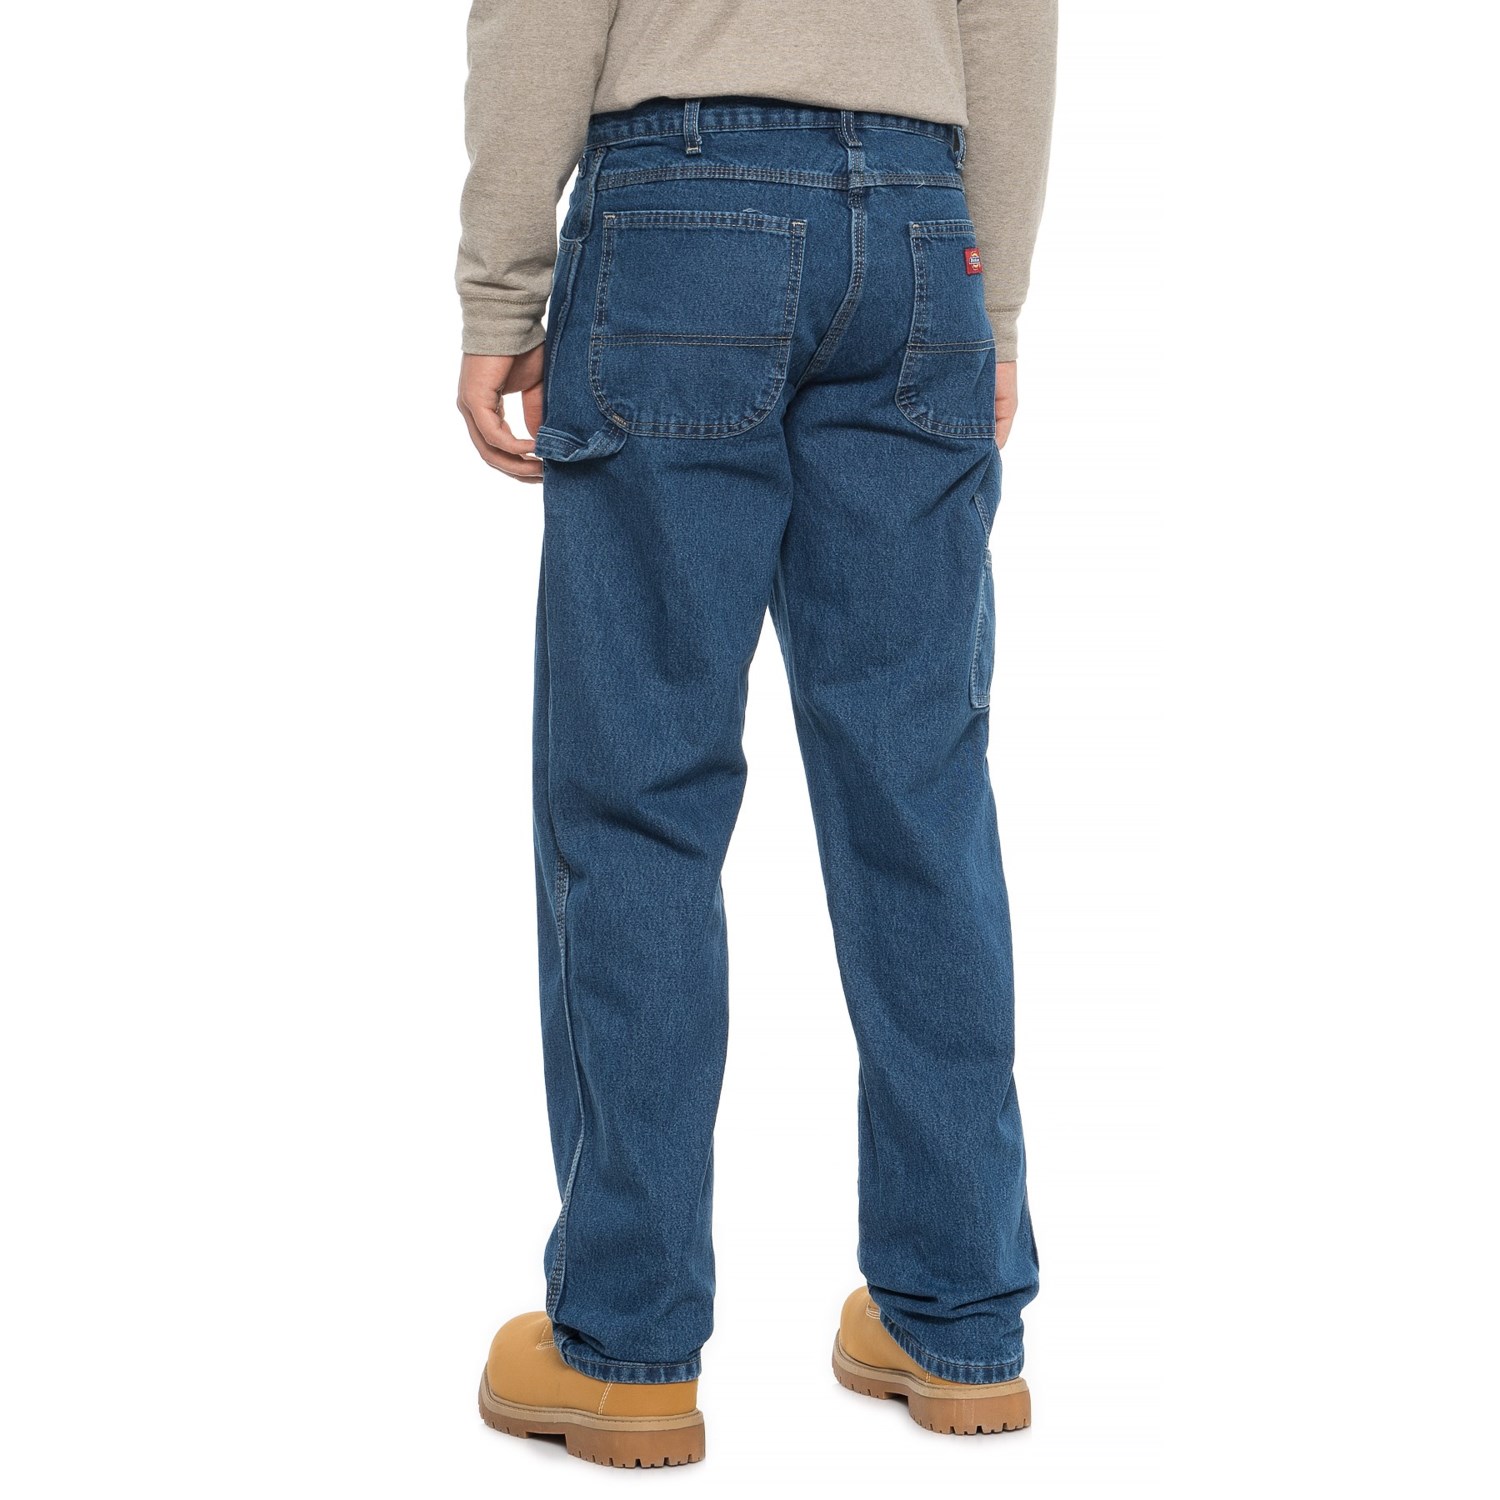 Dickies Carpenter Utility Jeans (For Men) - Save 34%